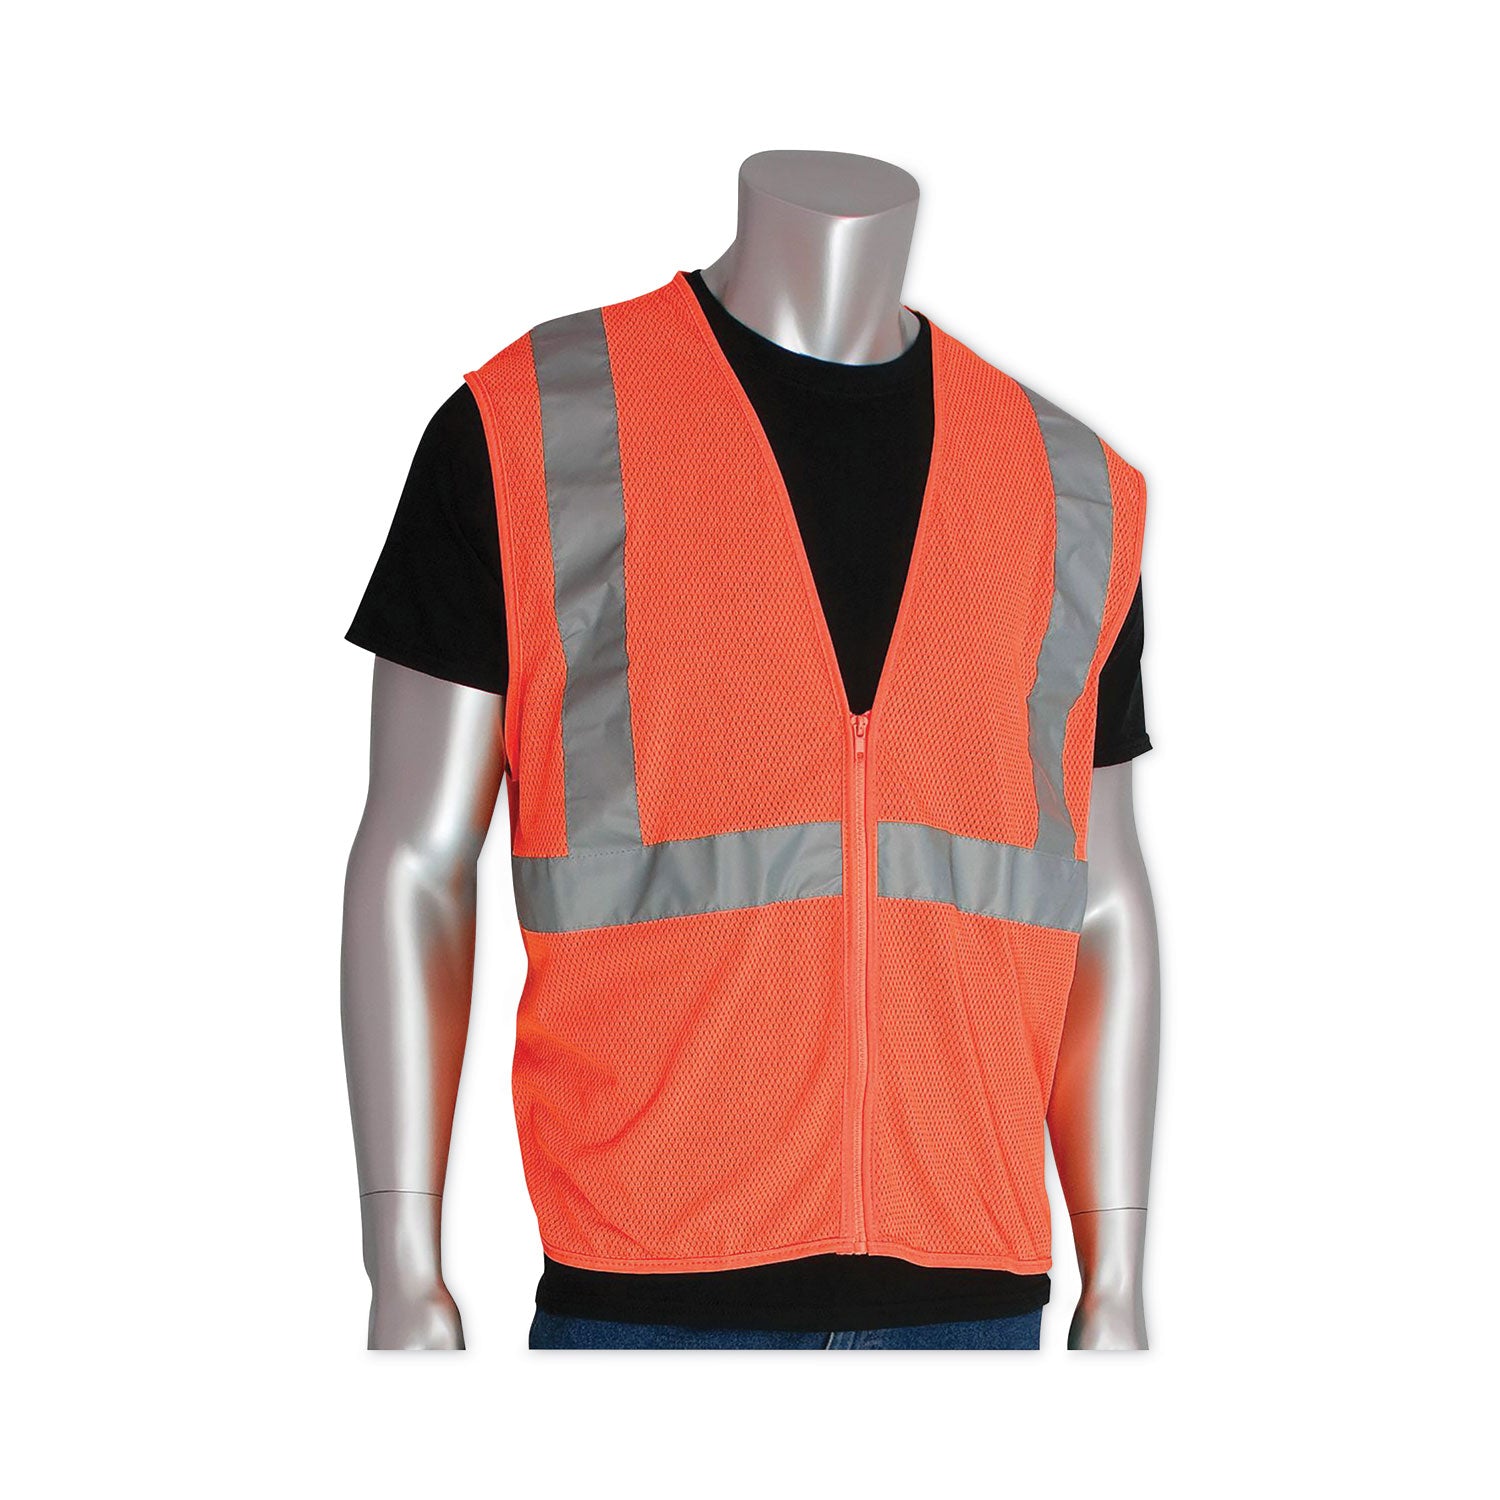 zipper-safety-vest-large-hi-viz-orange_pid302mvgzorl - 2